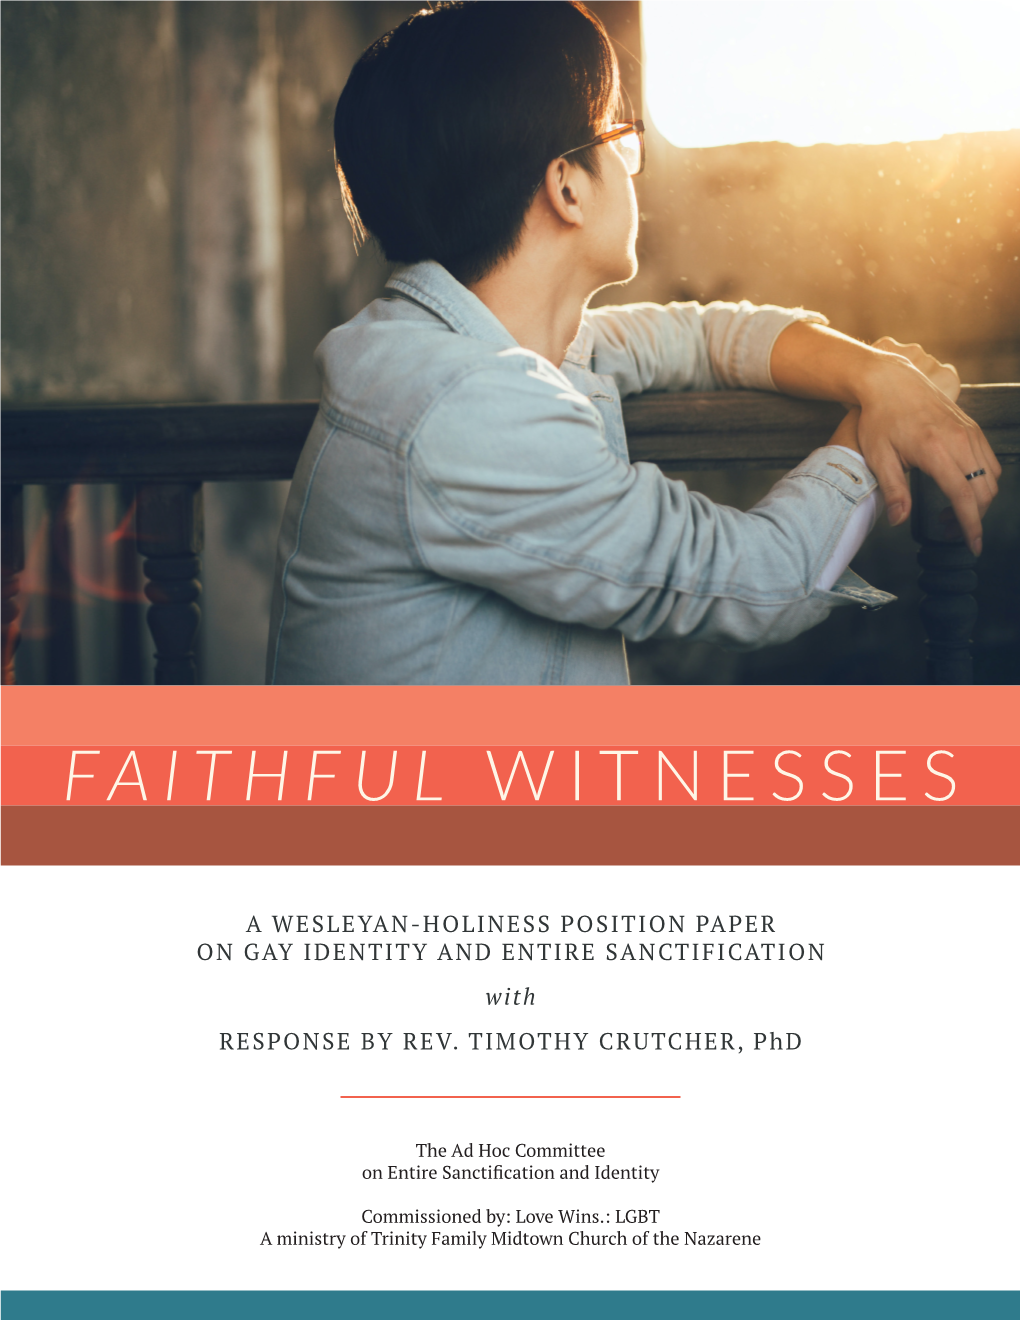 Faithful-Witnesses-Position-Paper.Pdf